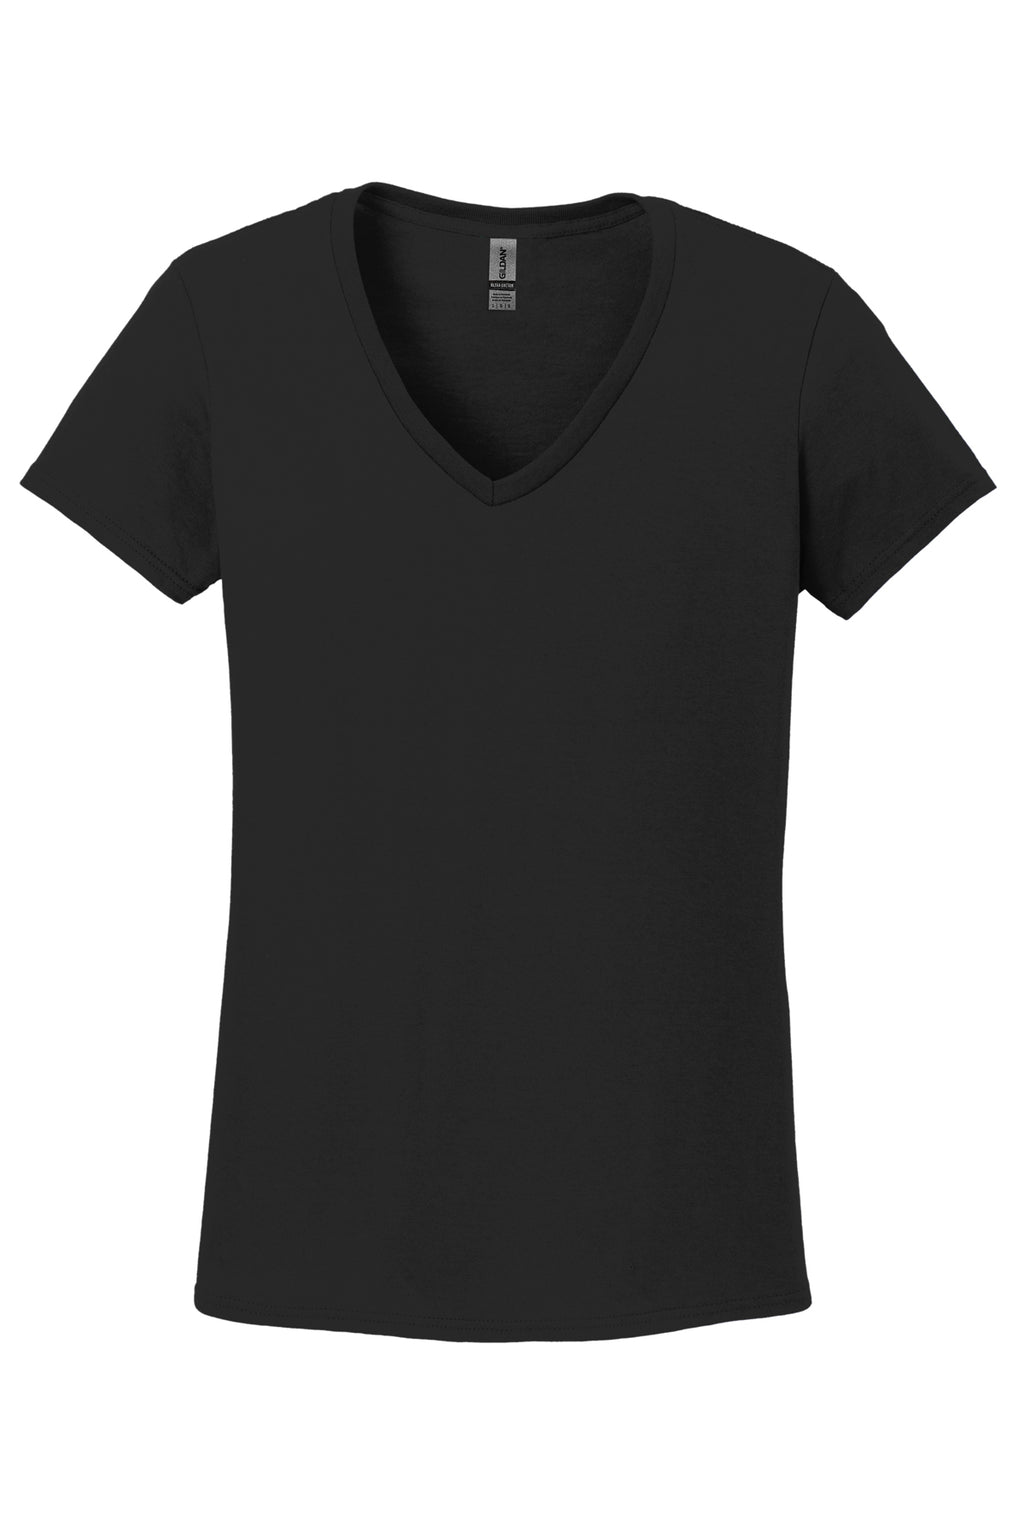 Gildan 100% Cotton Womens V-Neck Short Sleeve Shirts Black